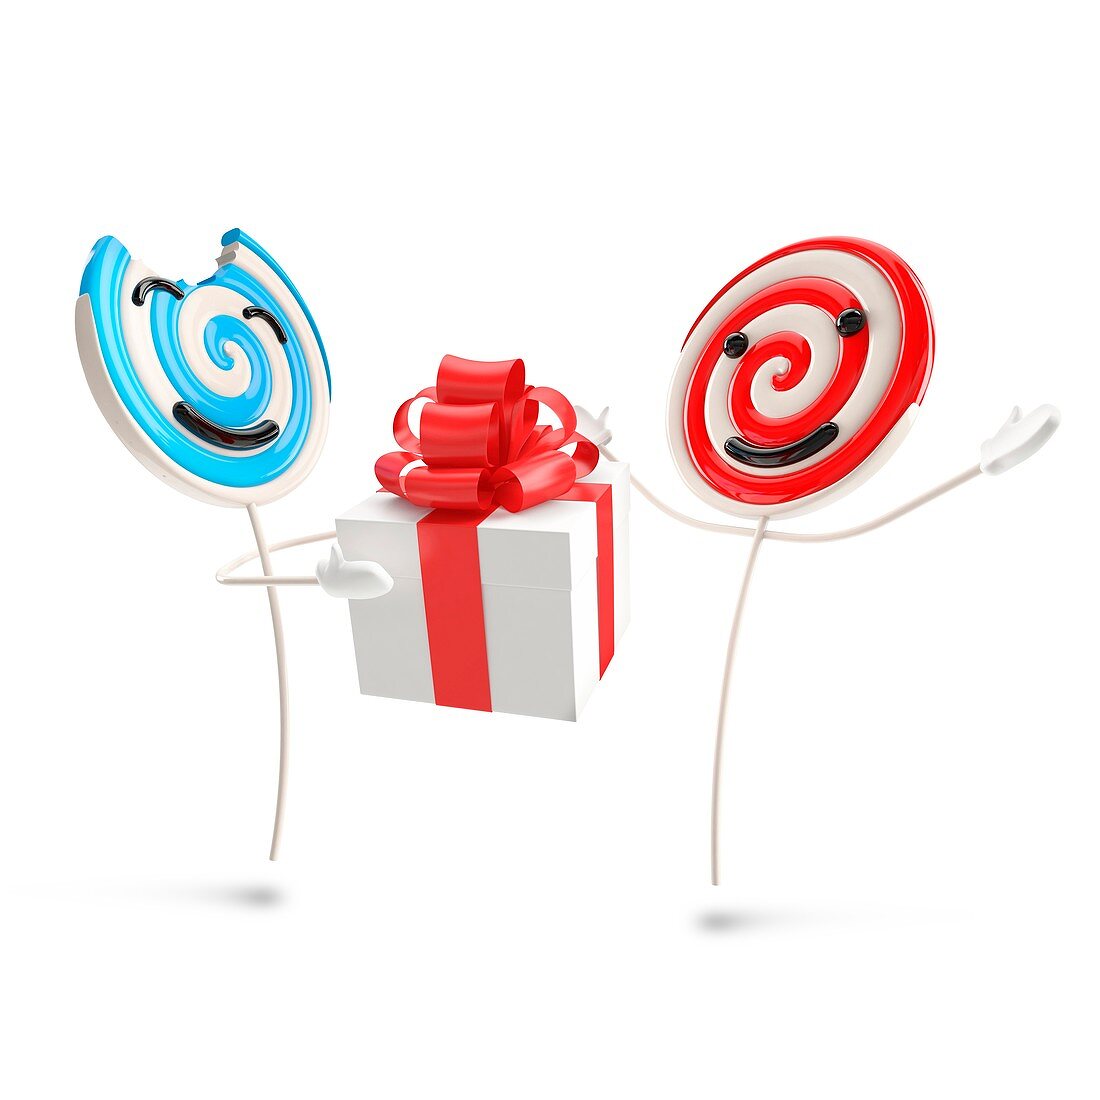 Lollipop person giving gift, illustration